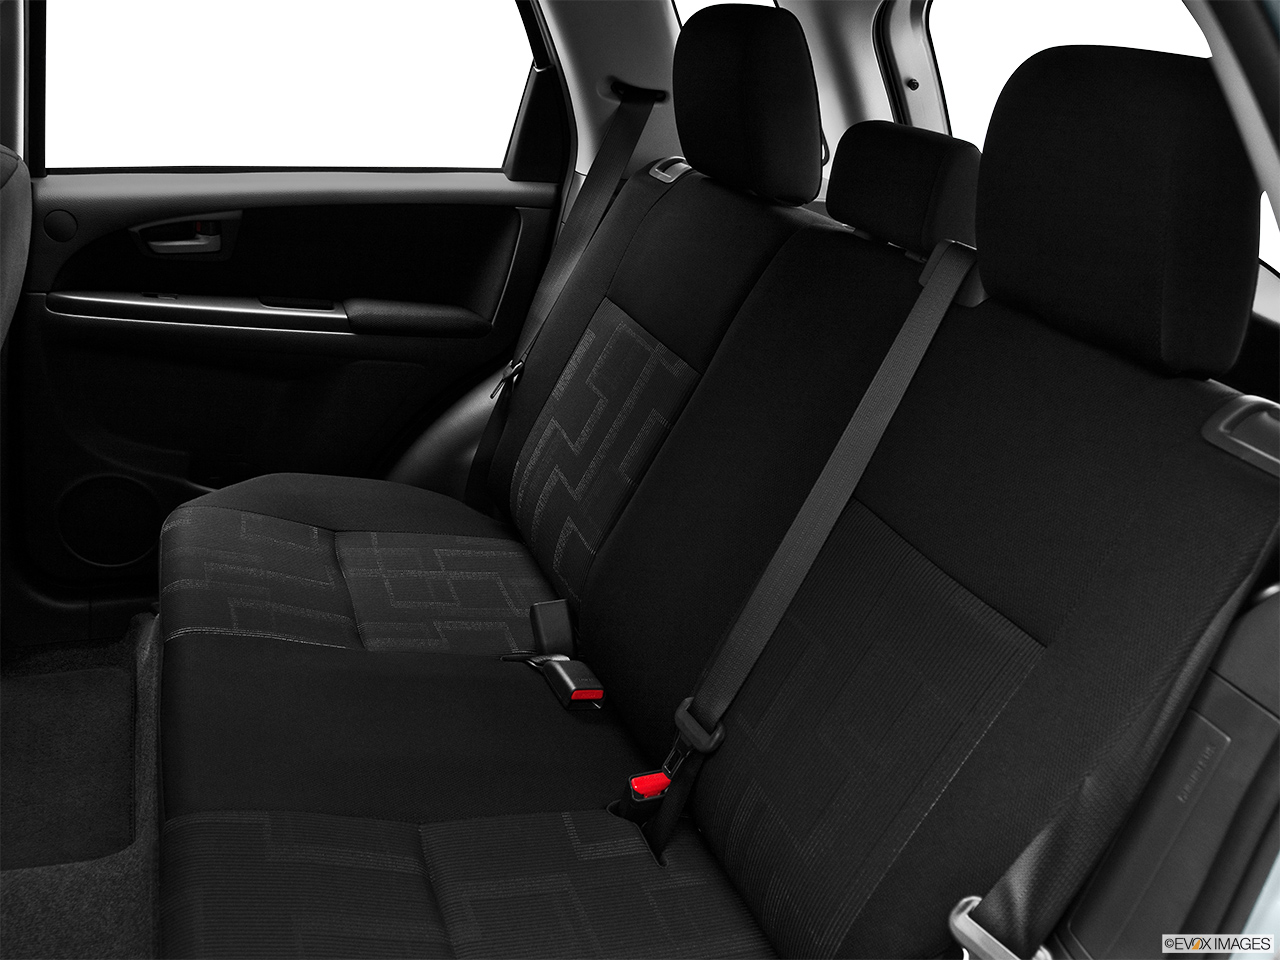 2011 Suzuki SX4 Sportback Technology Rear seats from Drivers Side. 